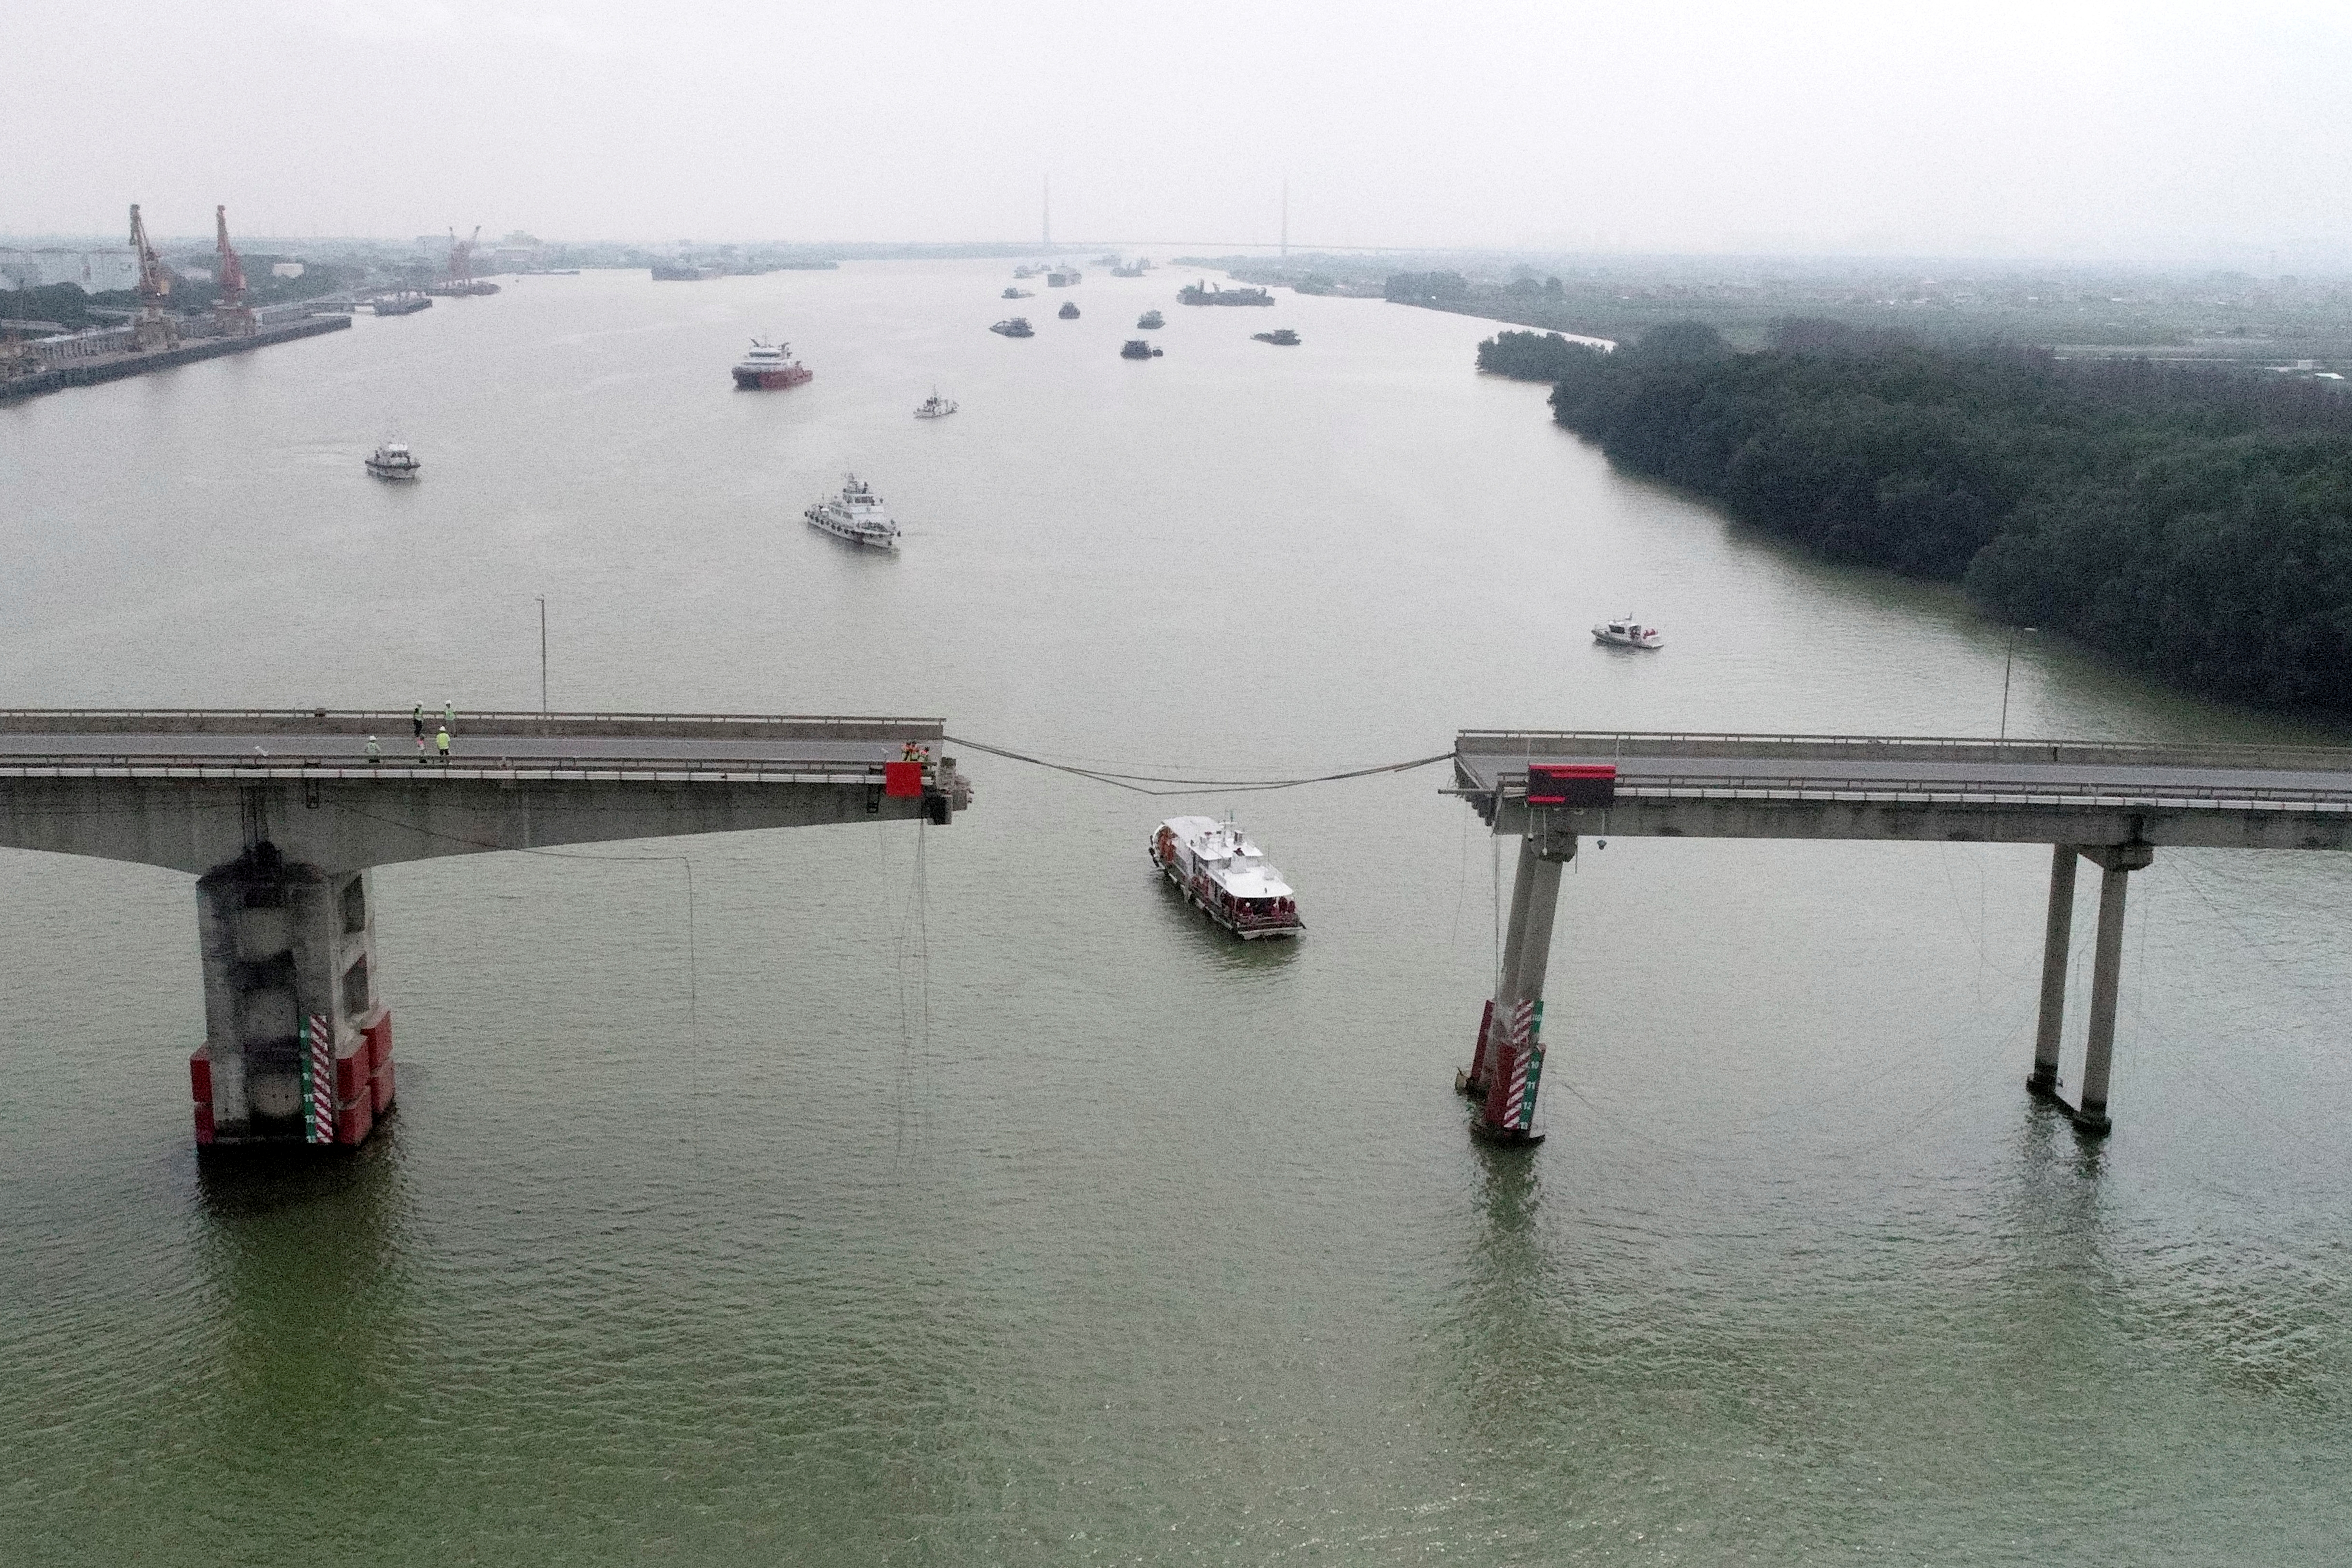 Bridge Collapse In Guangzhou China